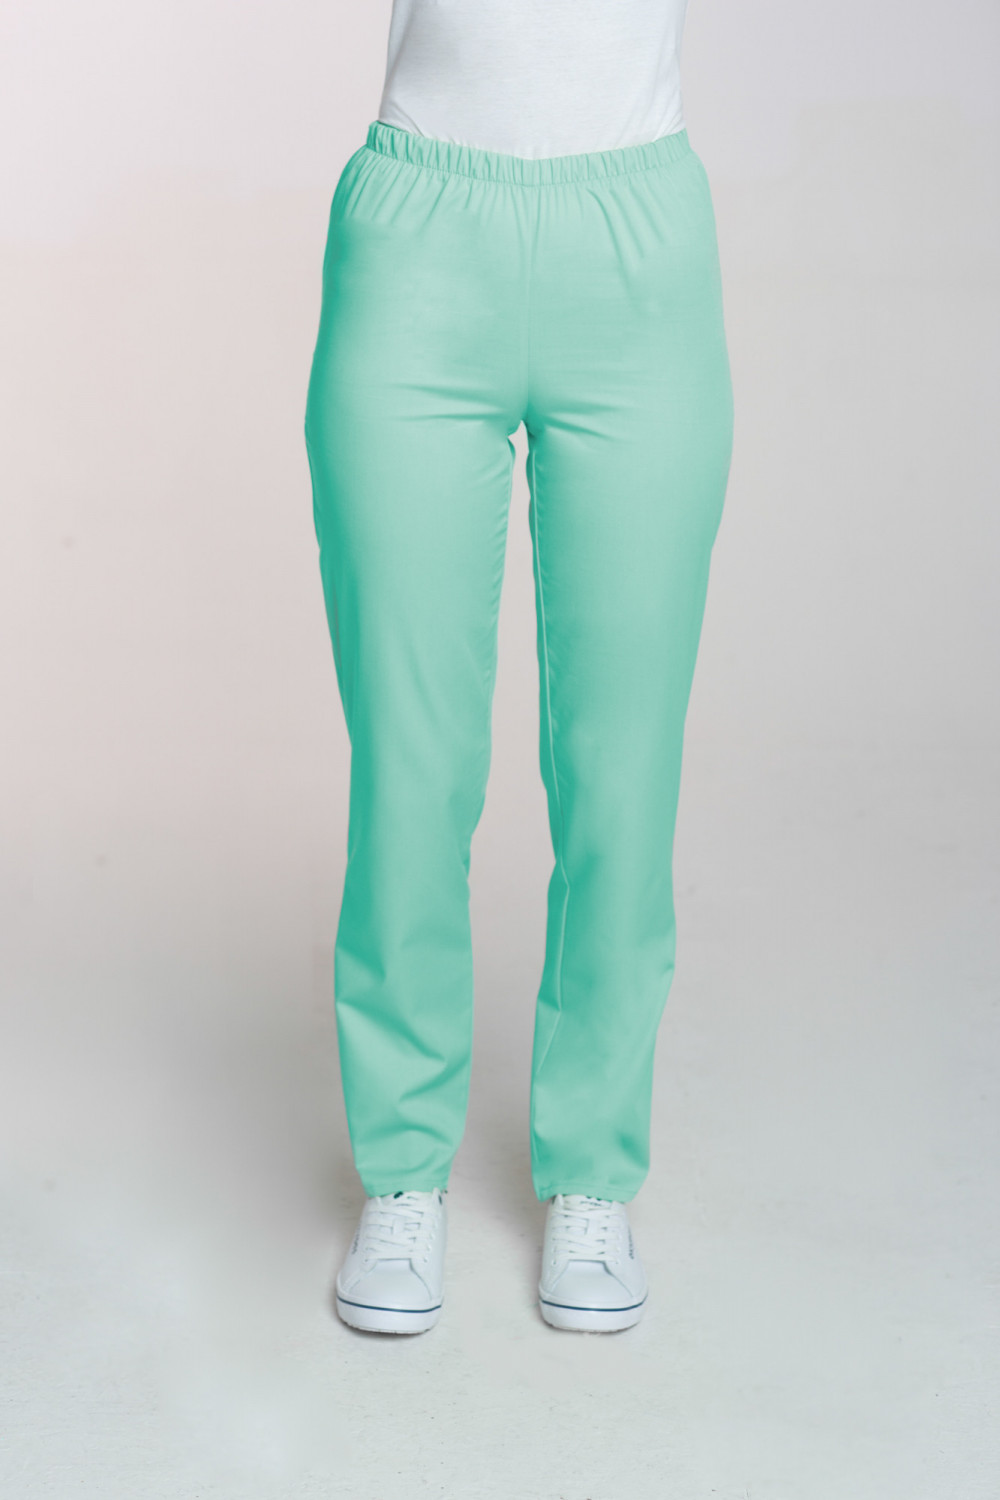 M-086 Spodnie damskie medyczne spodnie do pracy kolor mięta